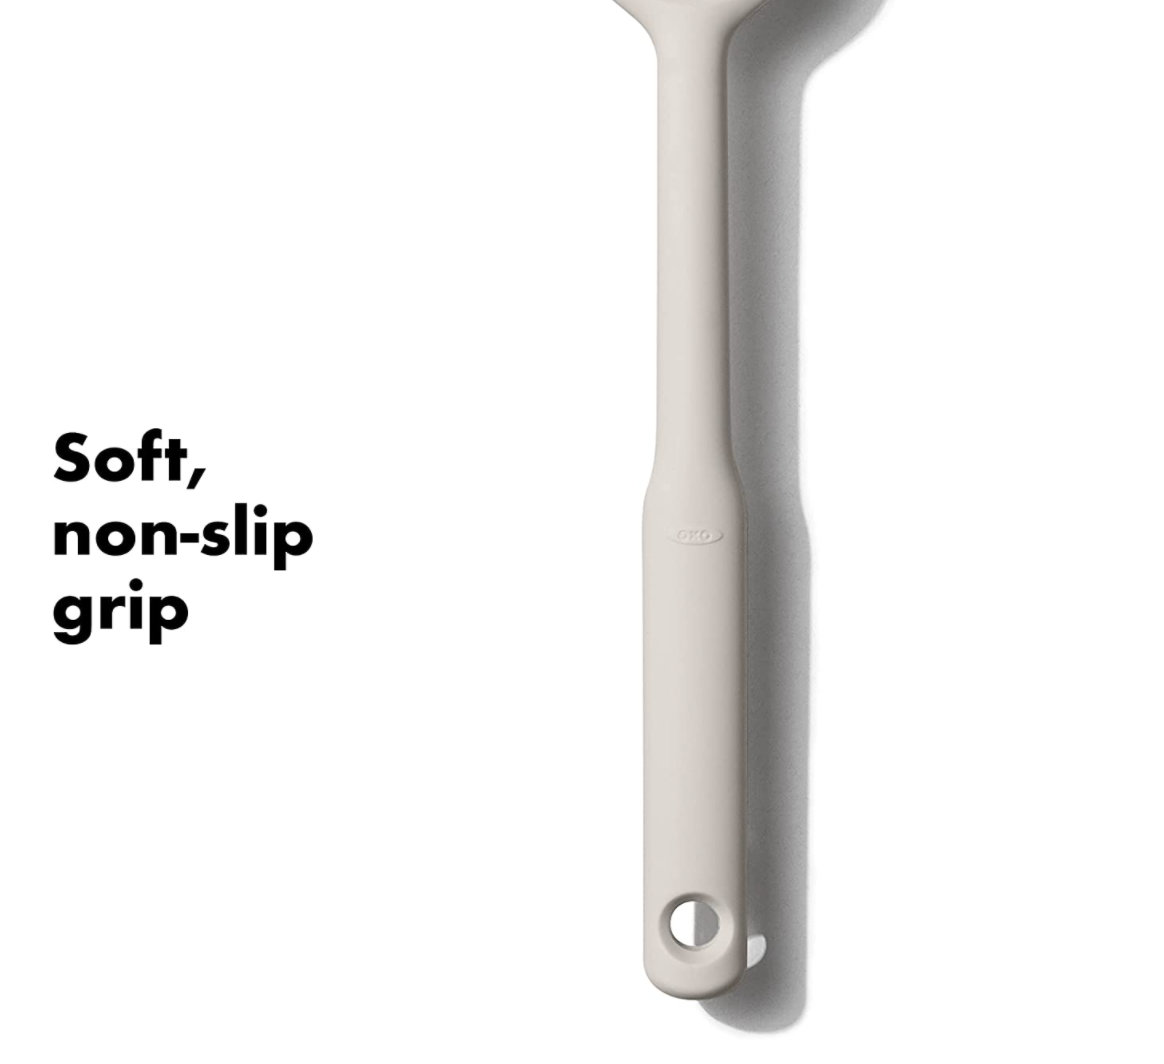 OXO Good Grips Silicone Spoon/Spatula – Oat